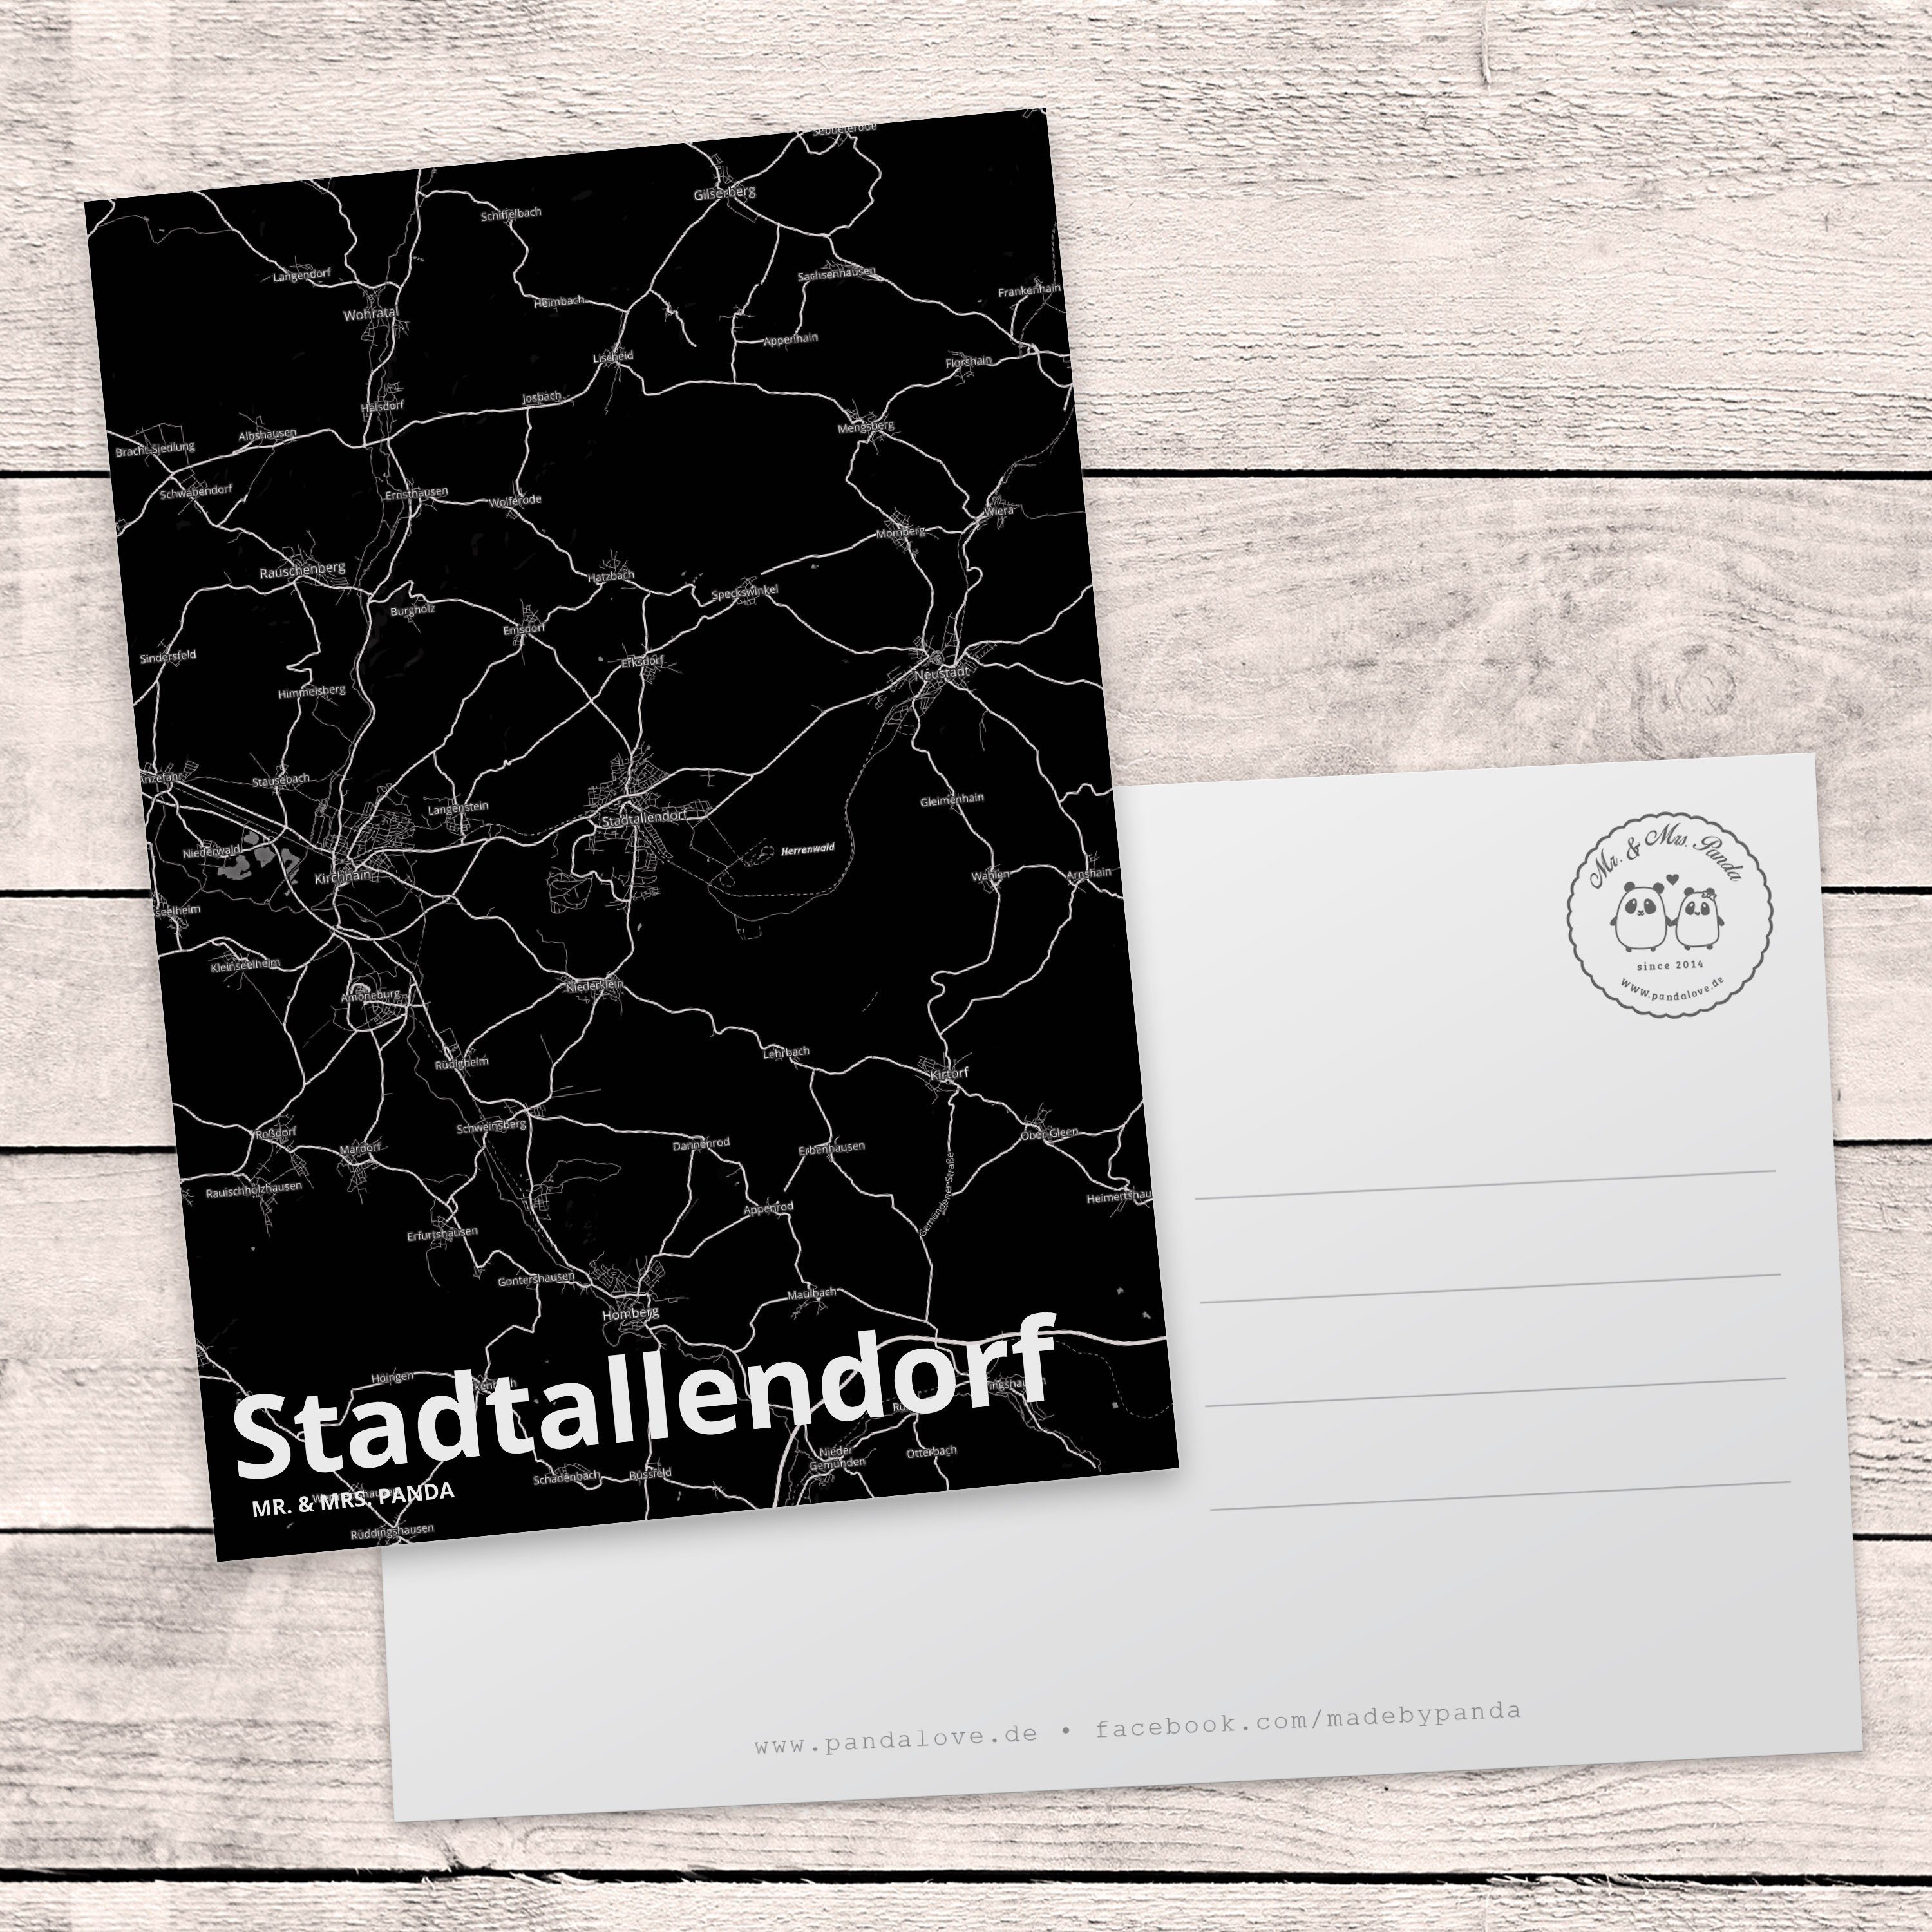 Mr. & Mrs. Postkarte Geburtstagskarte, St Einladungskarte, Ort, Stadtallendorf Geschenk, Panda 